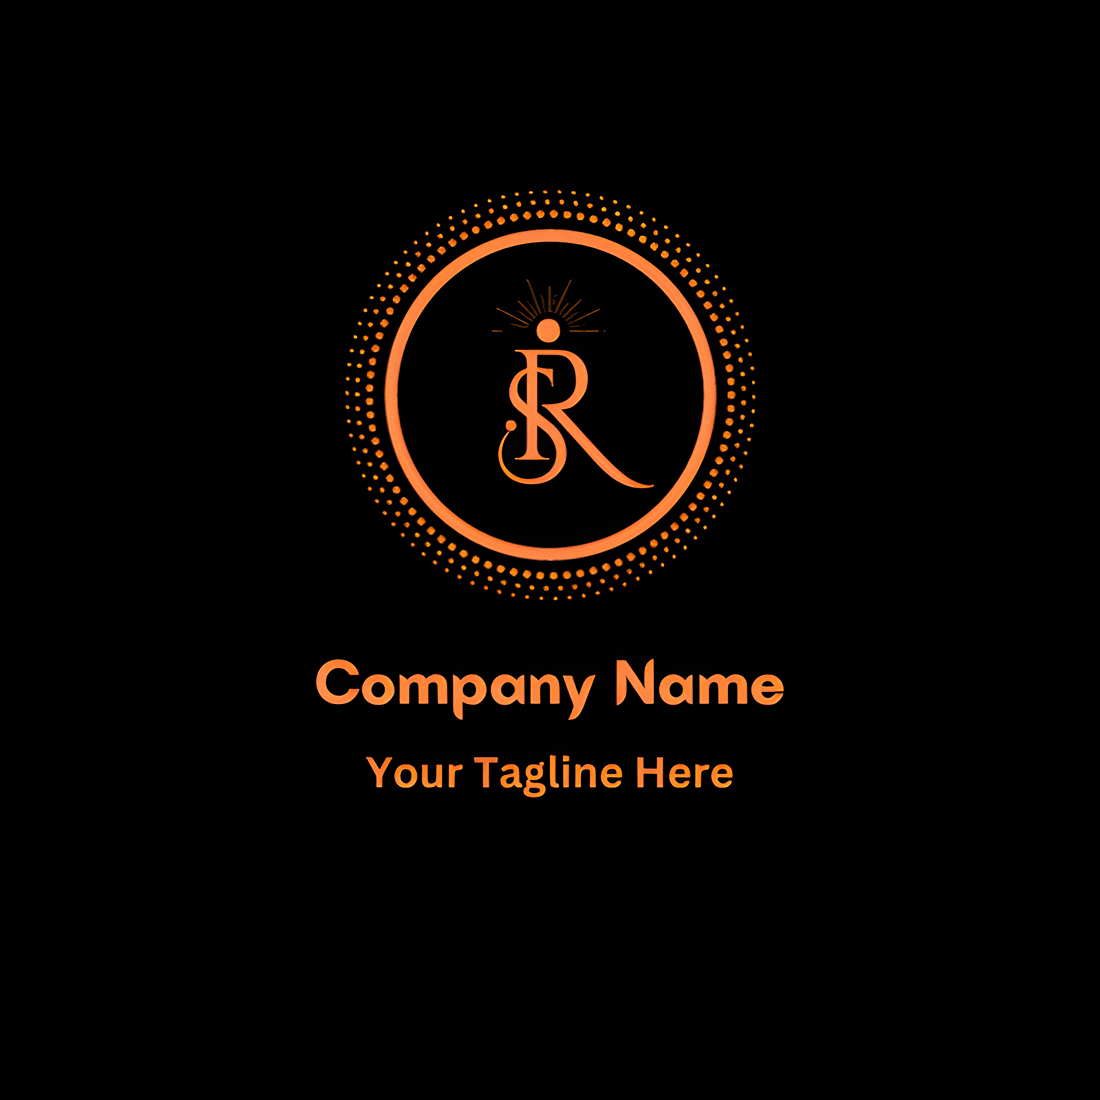 Letter R S - Logo Design Template, R S Logo vectors, icons, clipart graphics preview image.